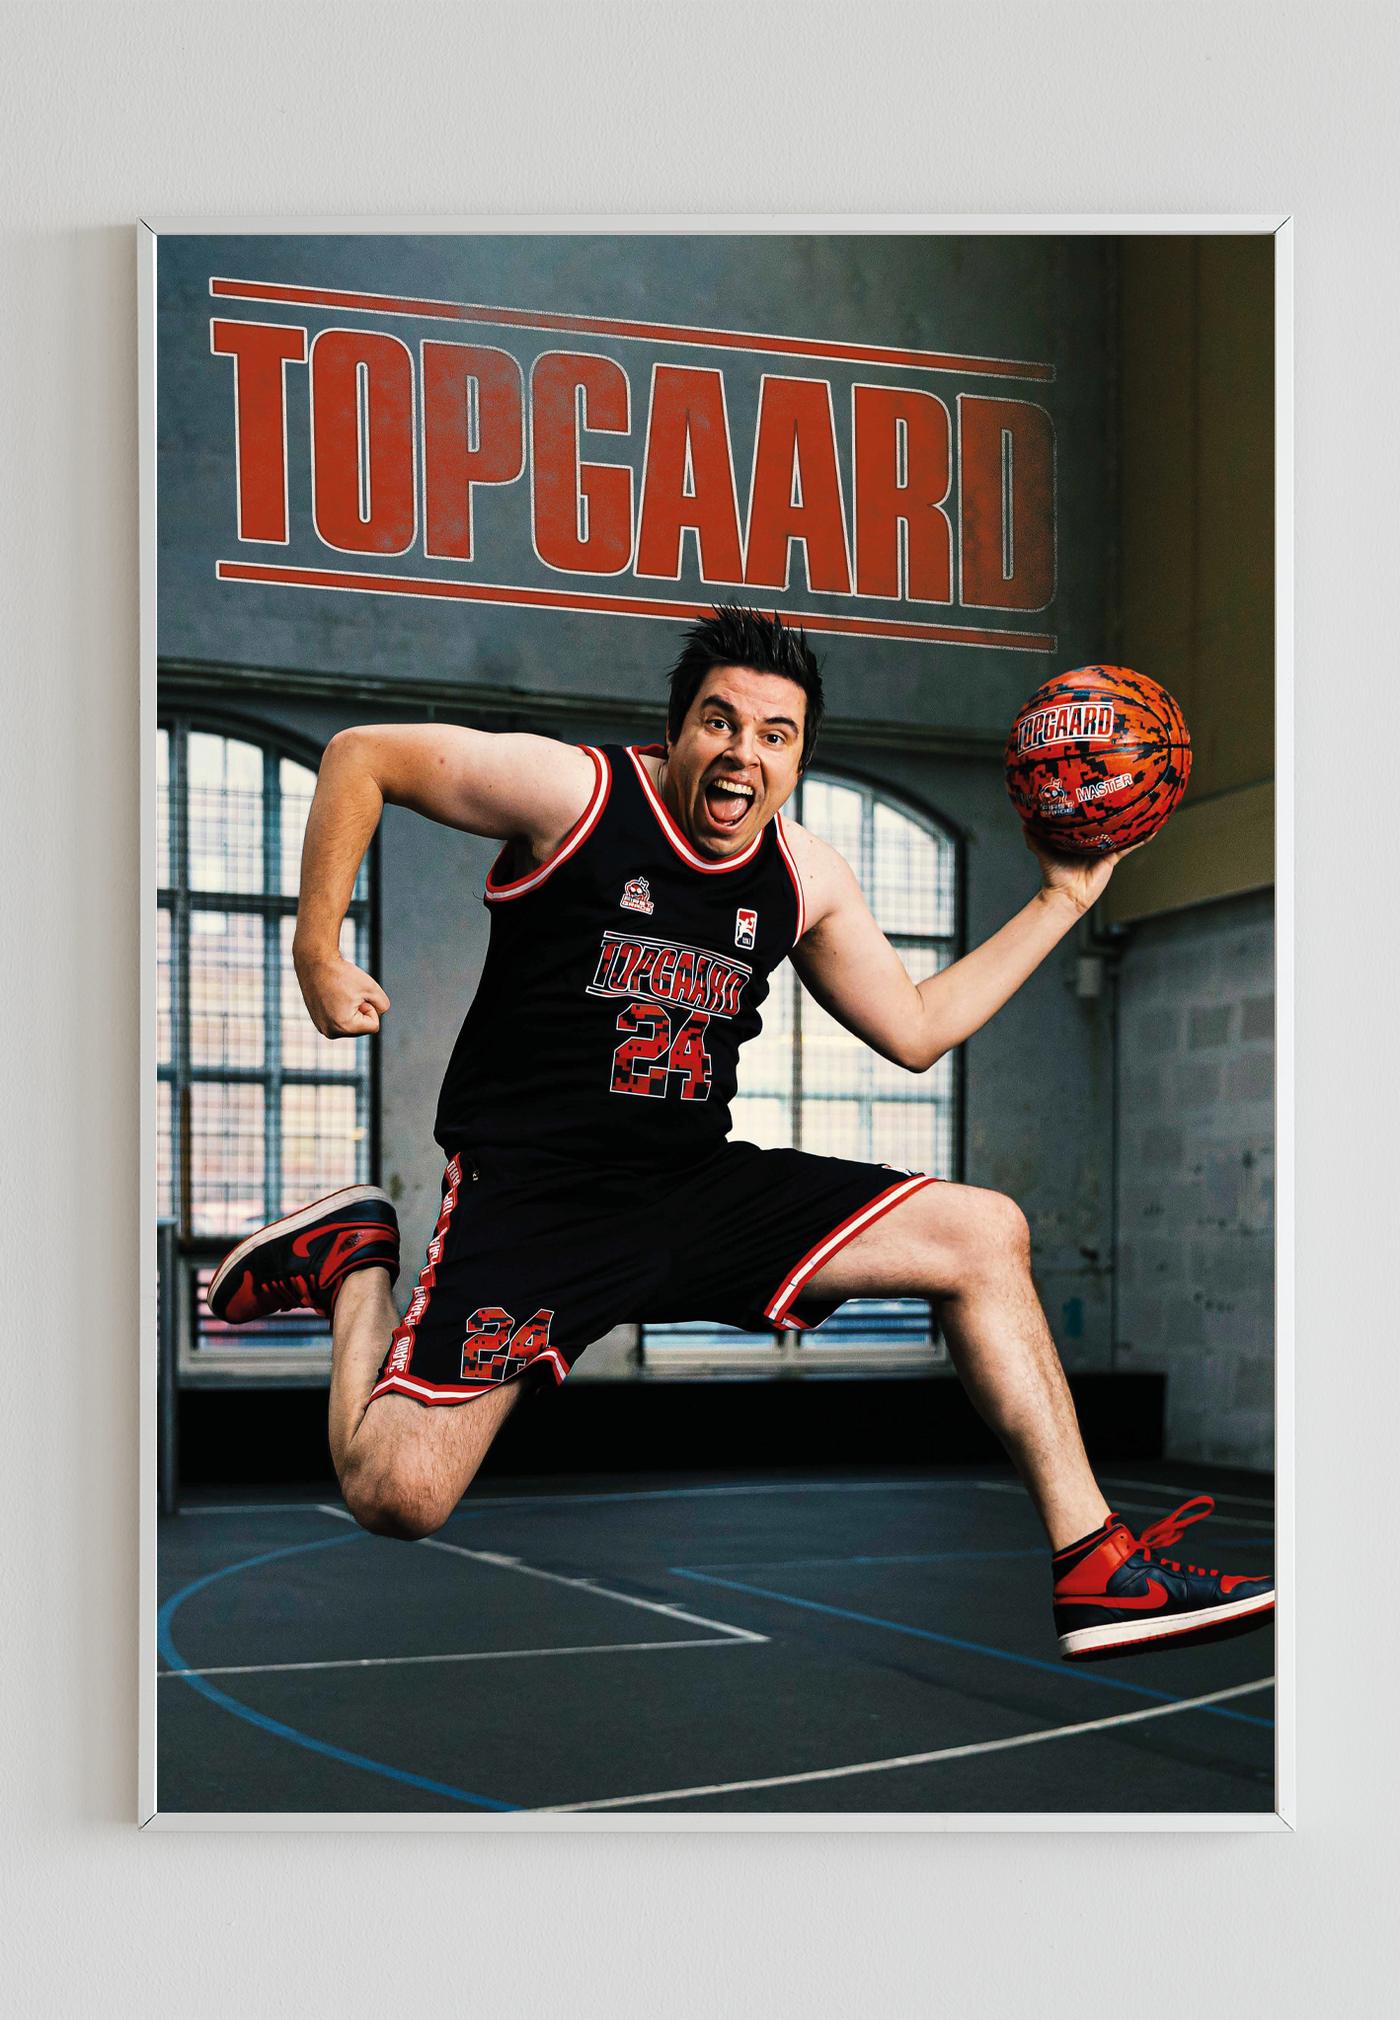 Topgaard - Basket Jump - Plakat